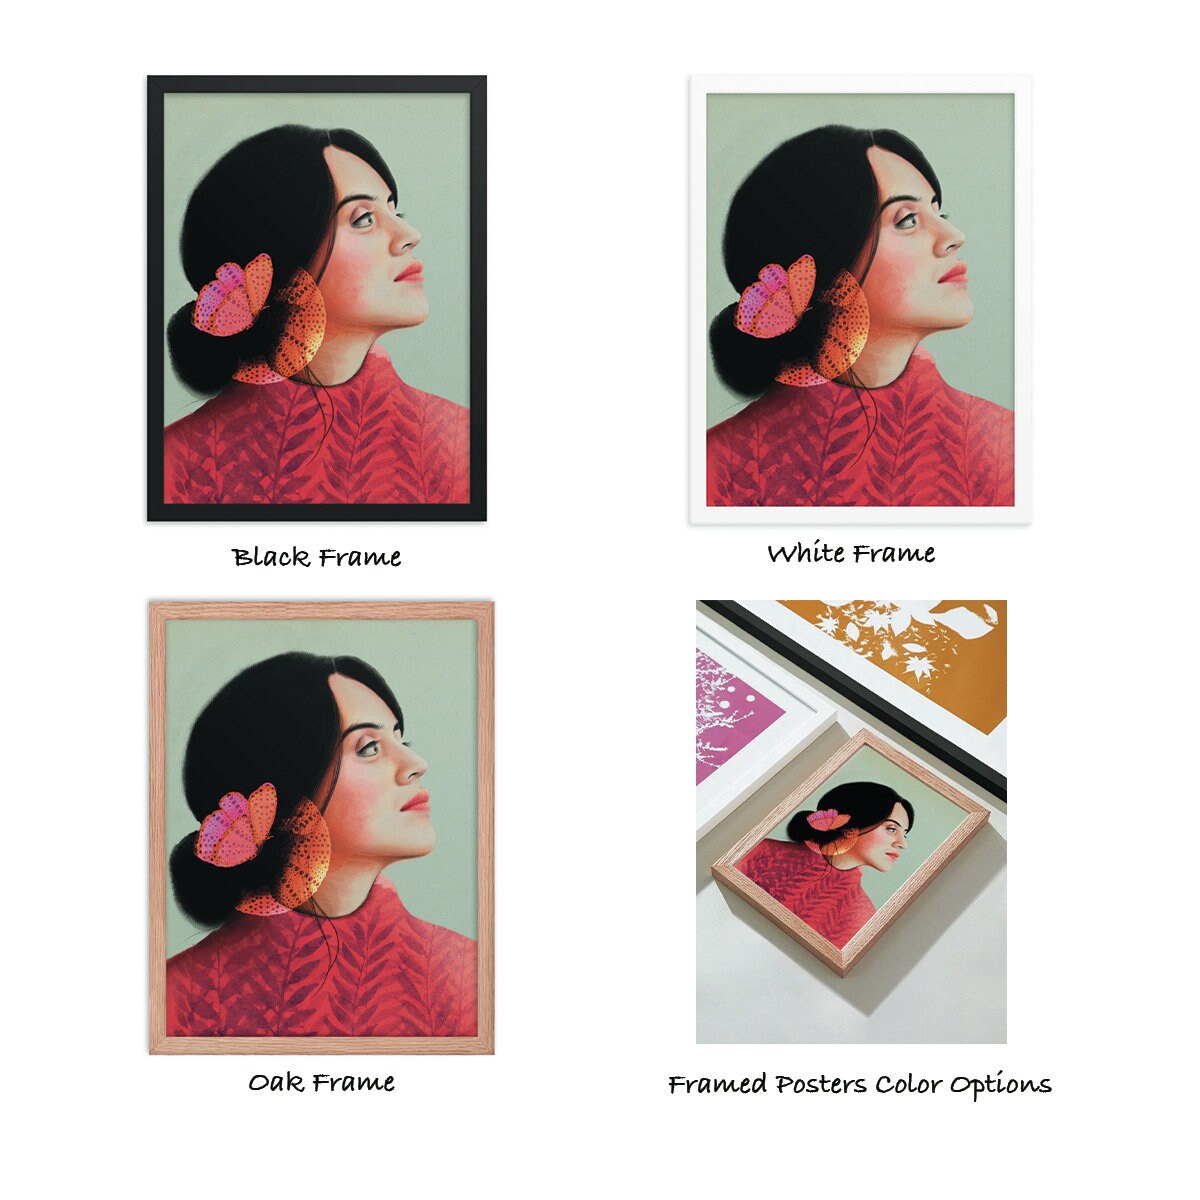 Woman Art Poster, Portrait Art Print, Bedroom Decor for Women, Giclée printing quality